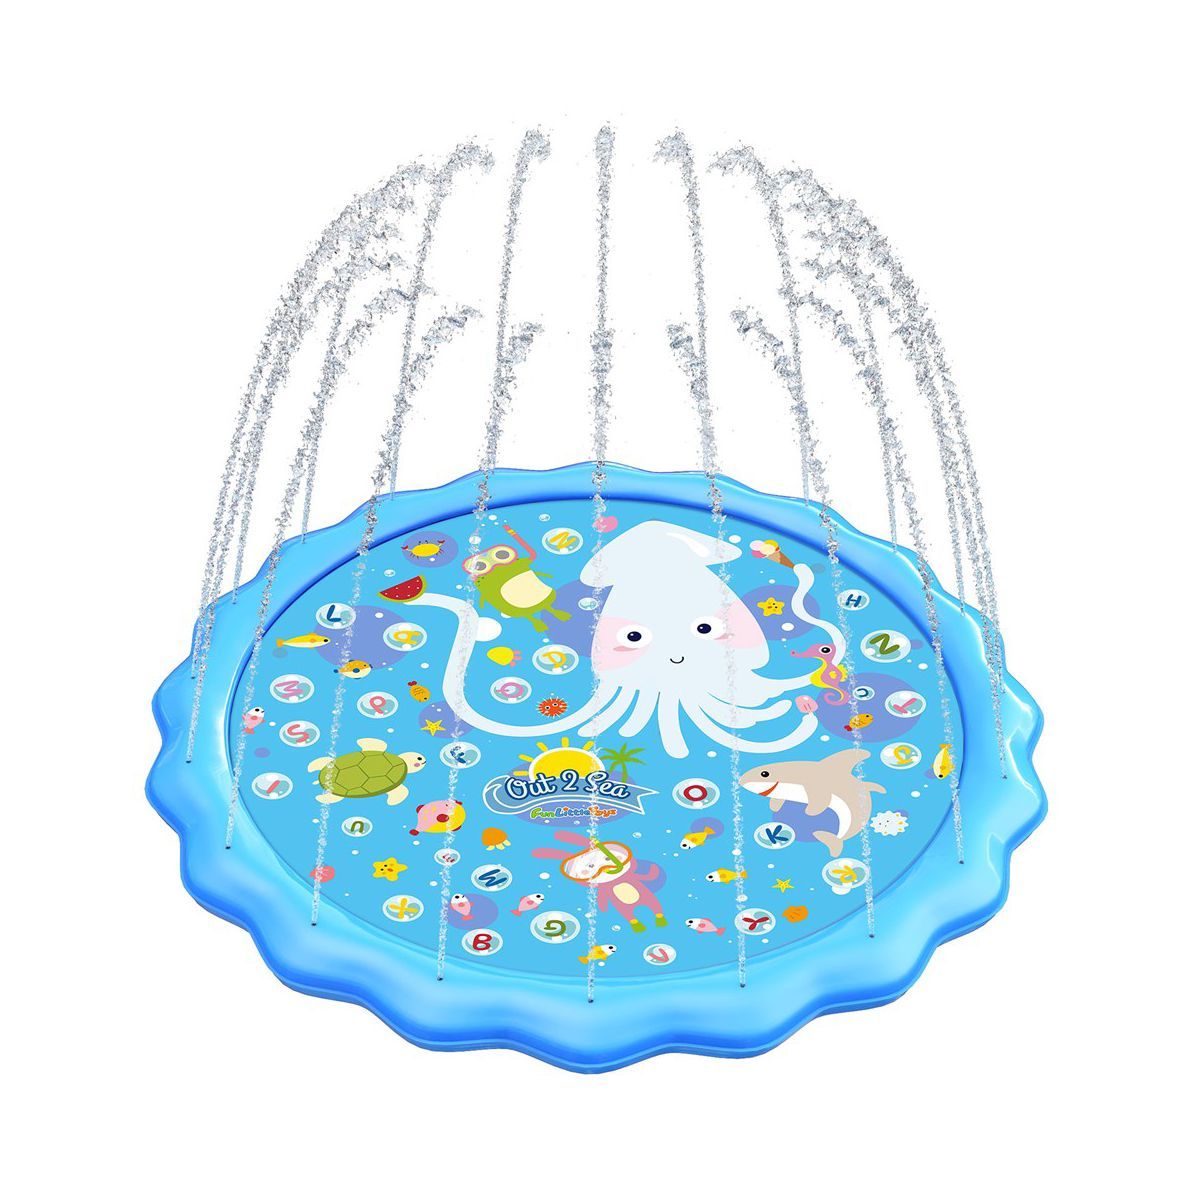 Fun Little Toys Aquatic Splash Pad | Target